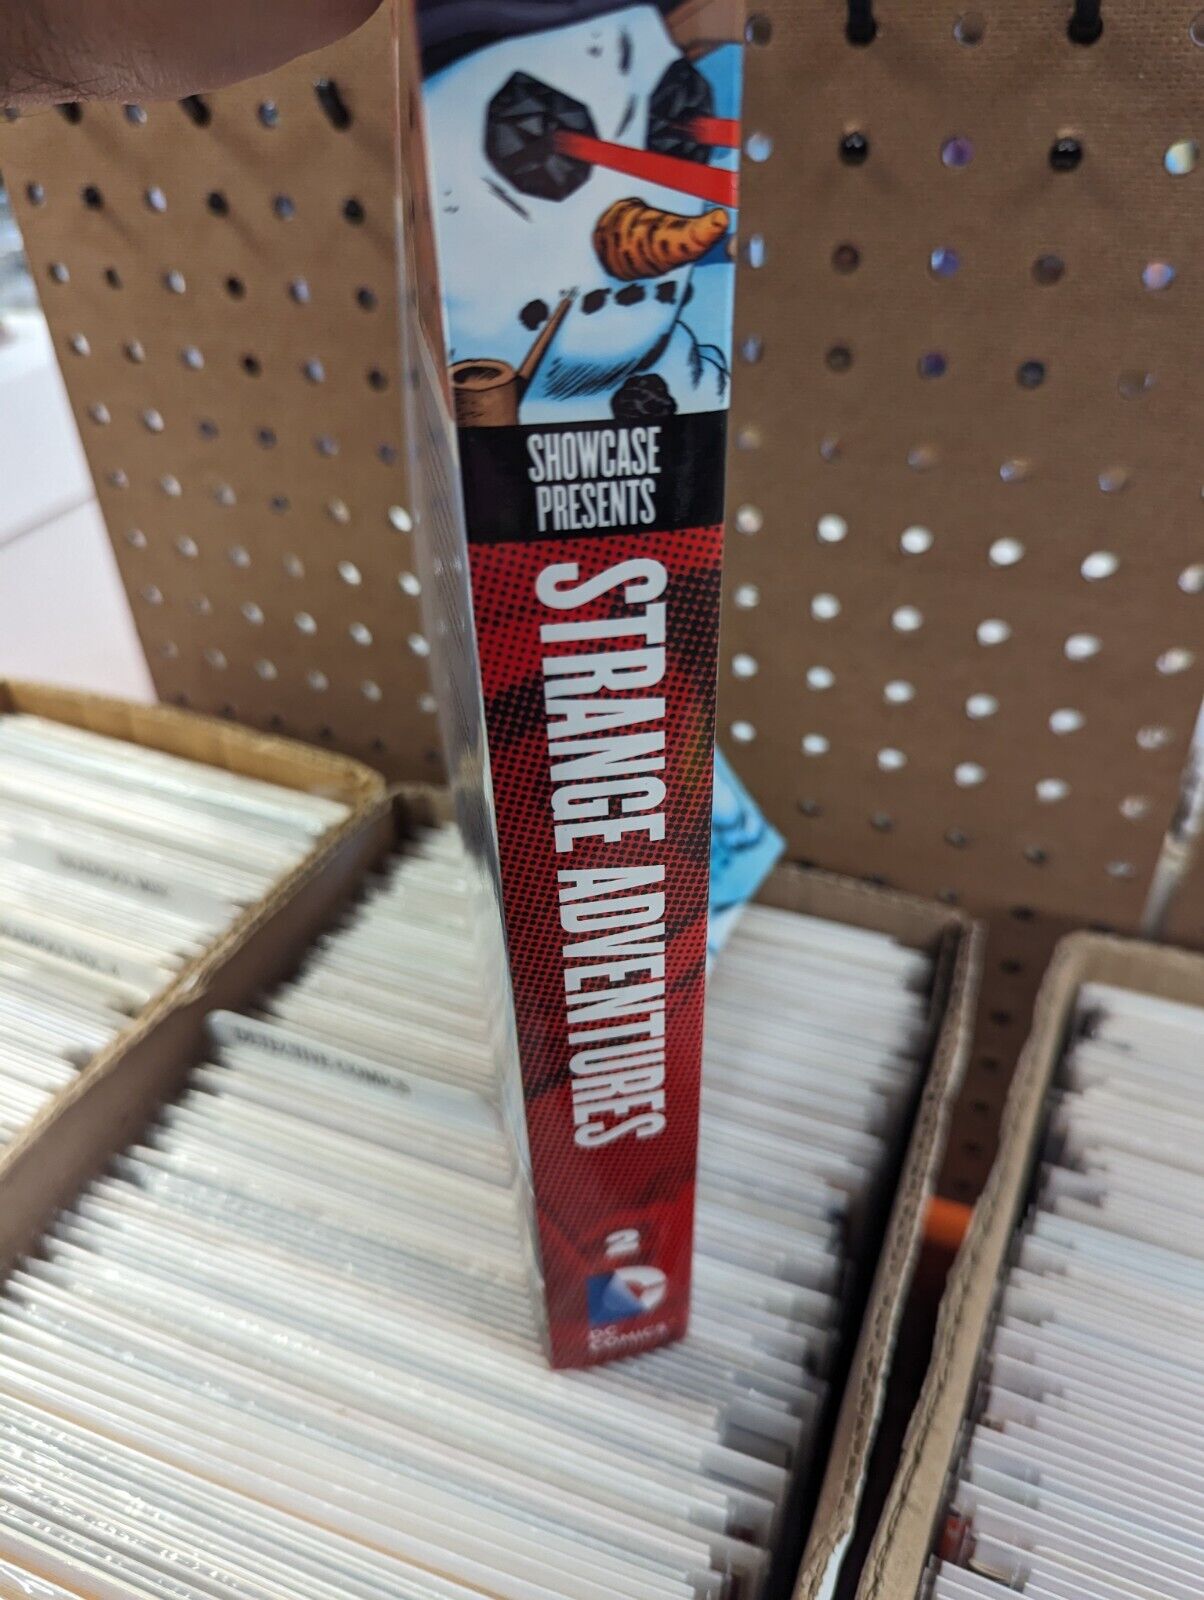 DC Showcase Presents Strange Adventures Volume 2